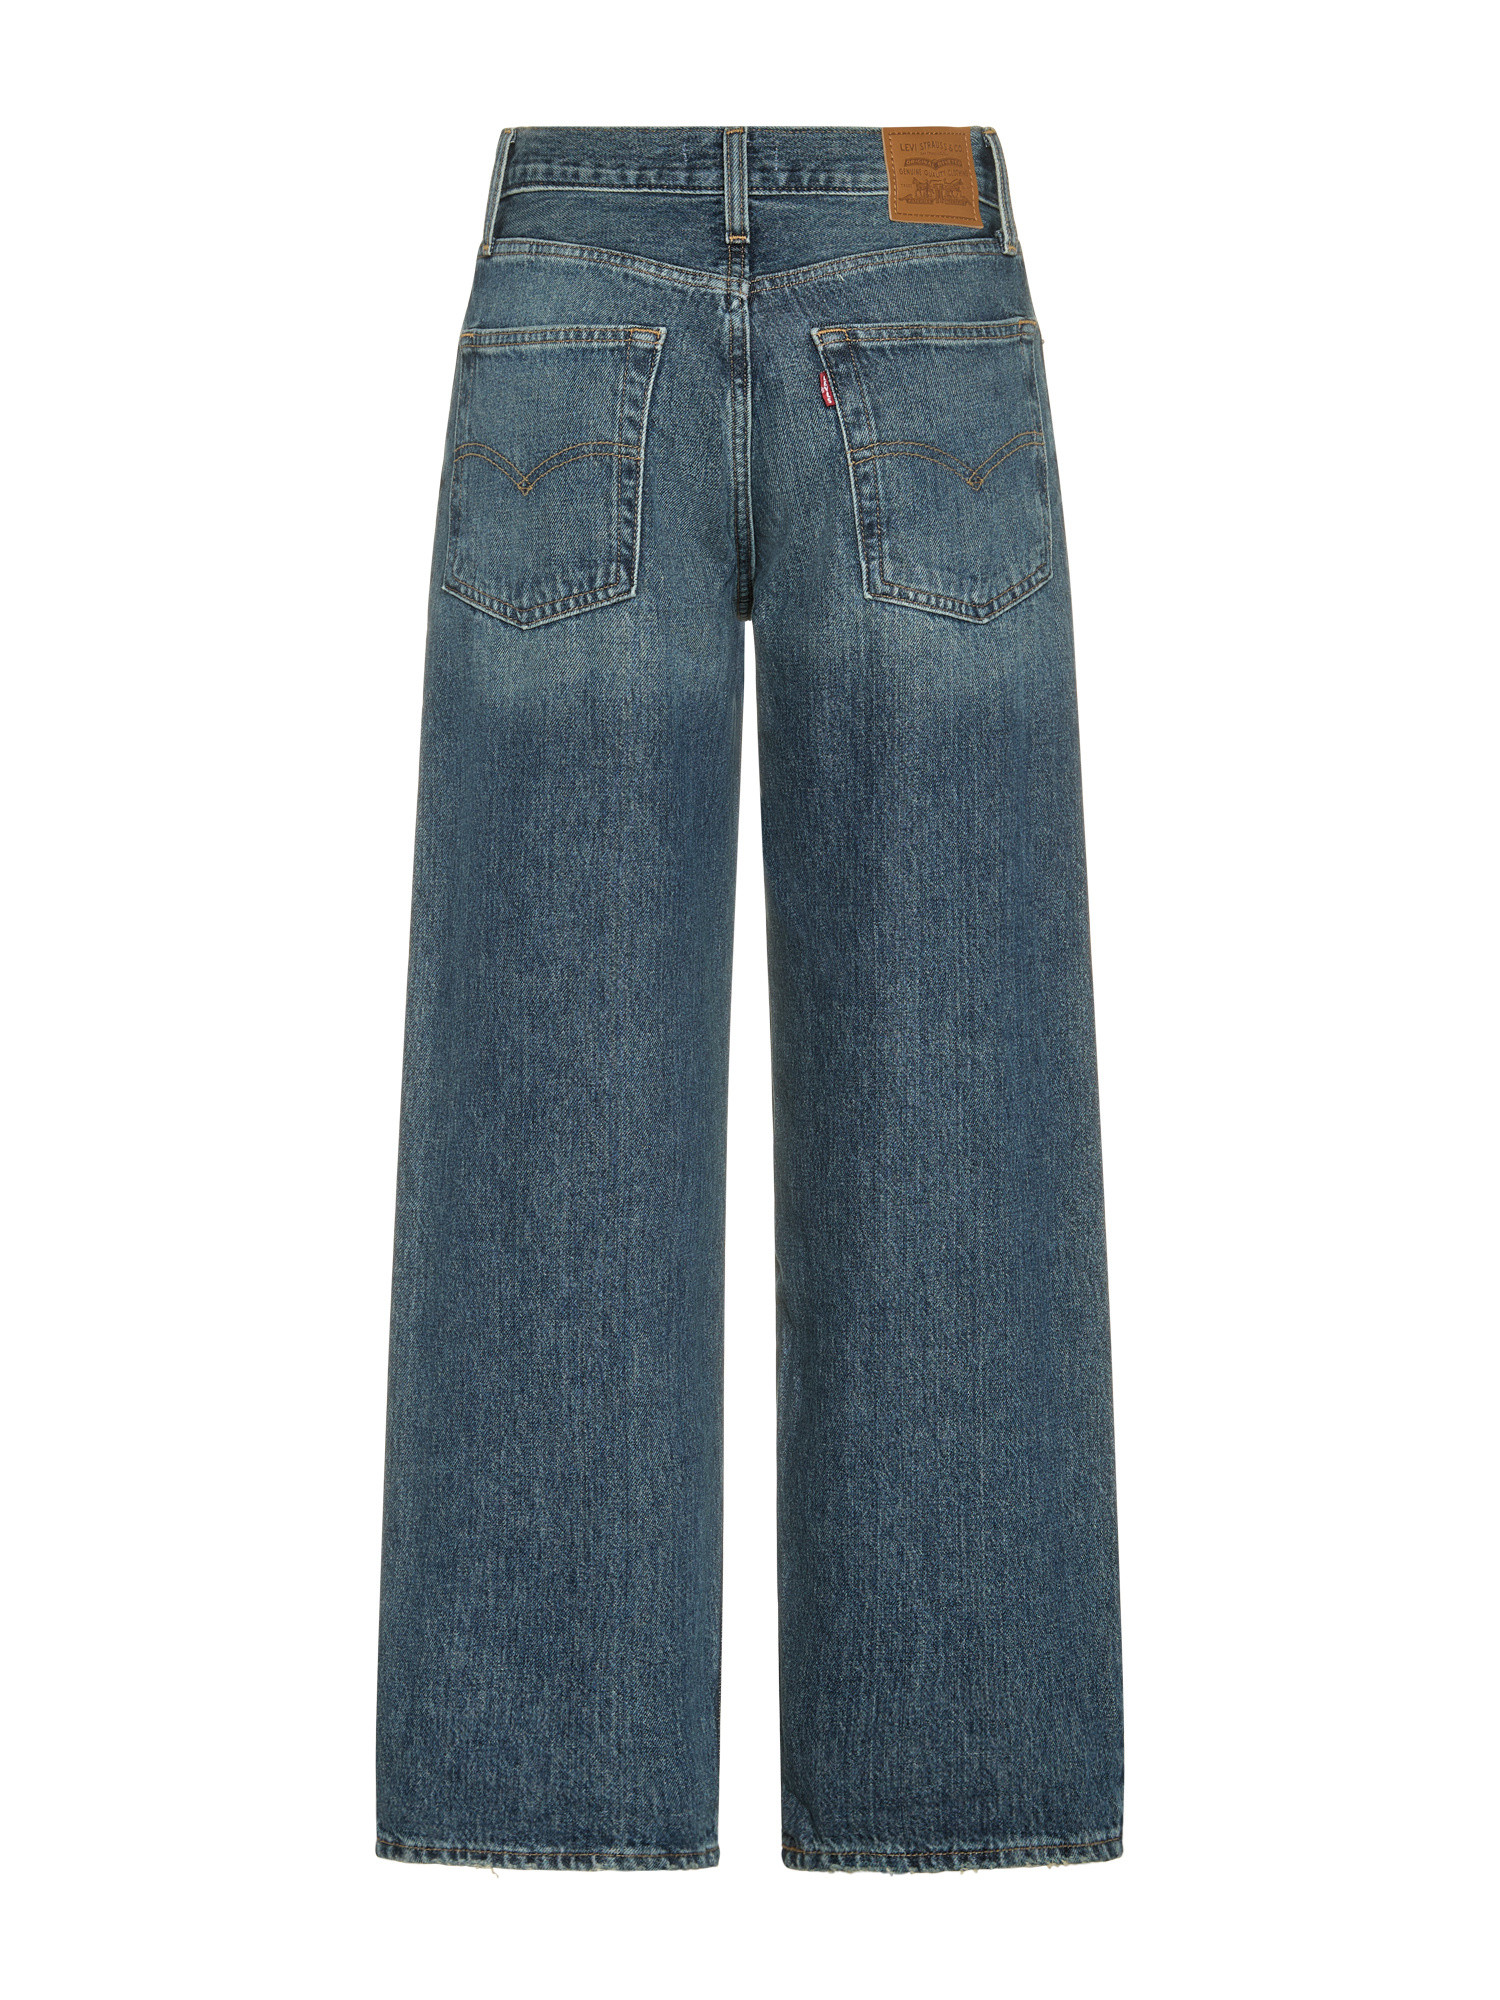 Levi's - Oversized dad jeans, Blue, large image number 1